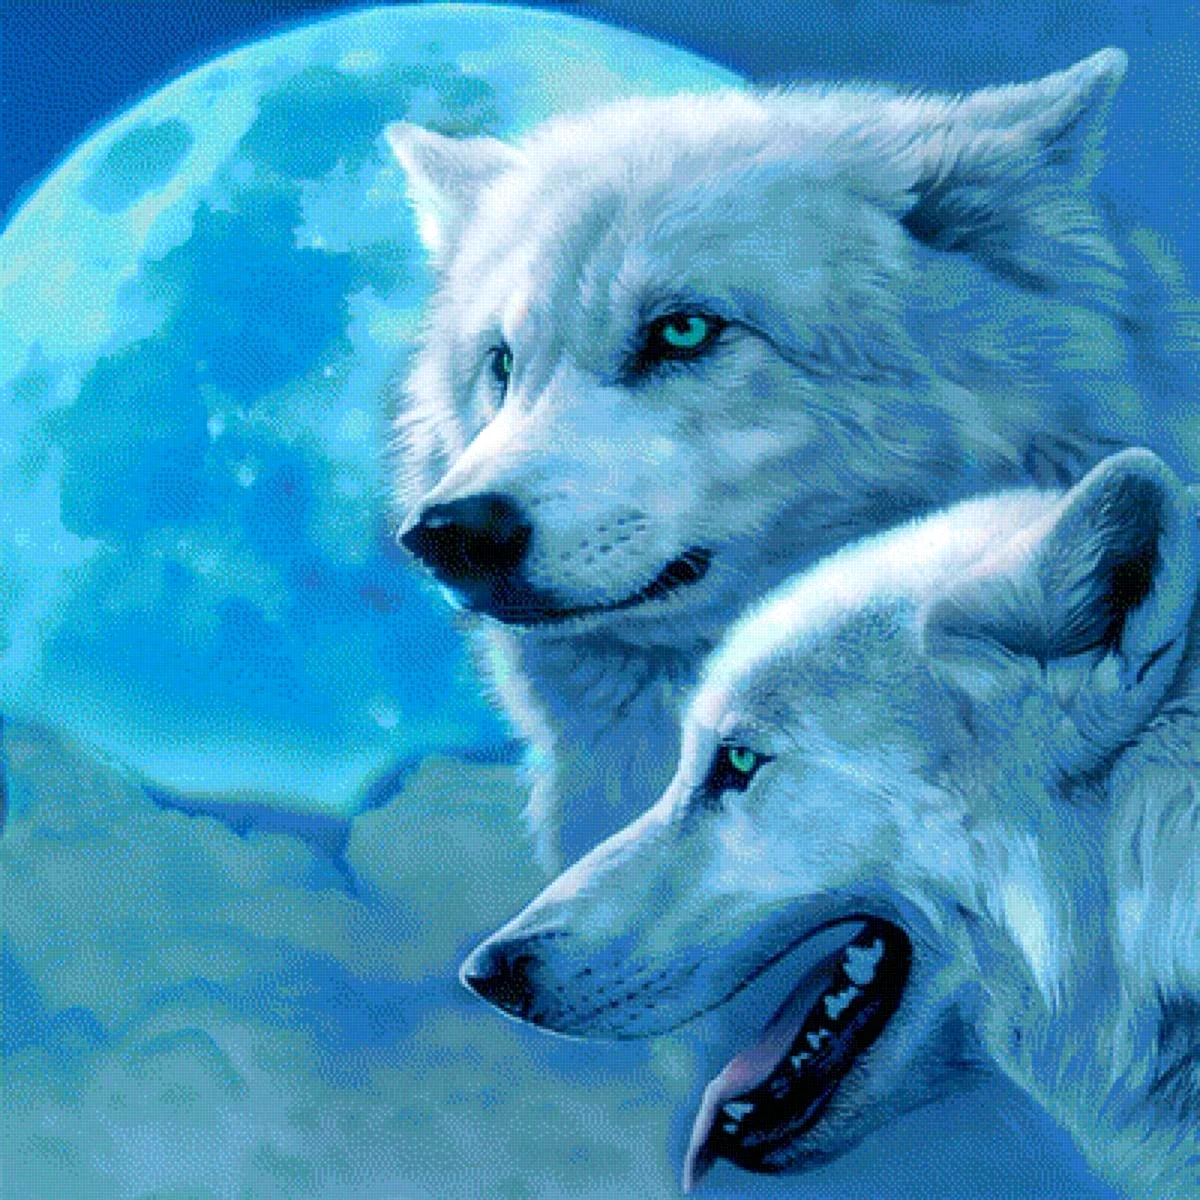 Два белых волка